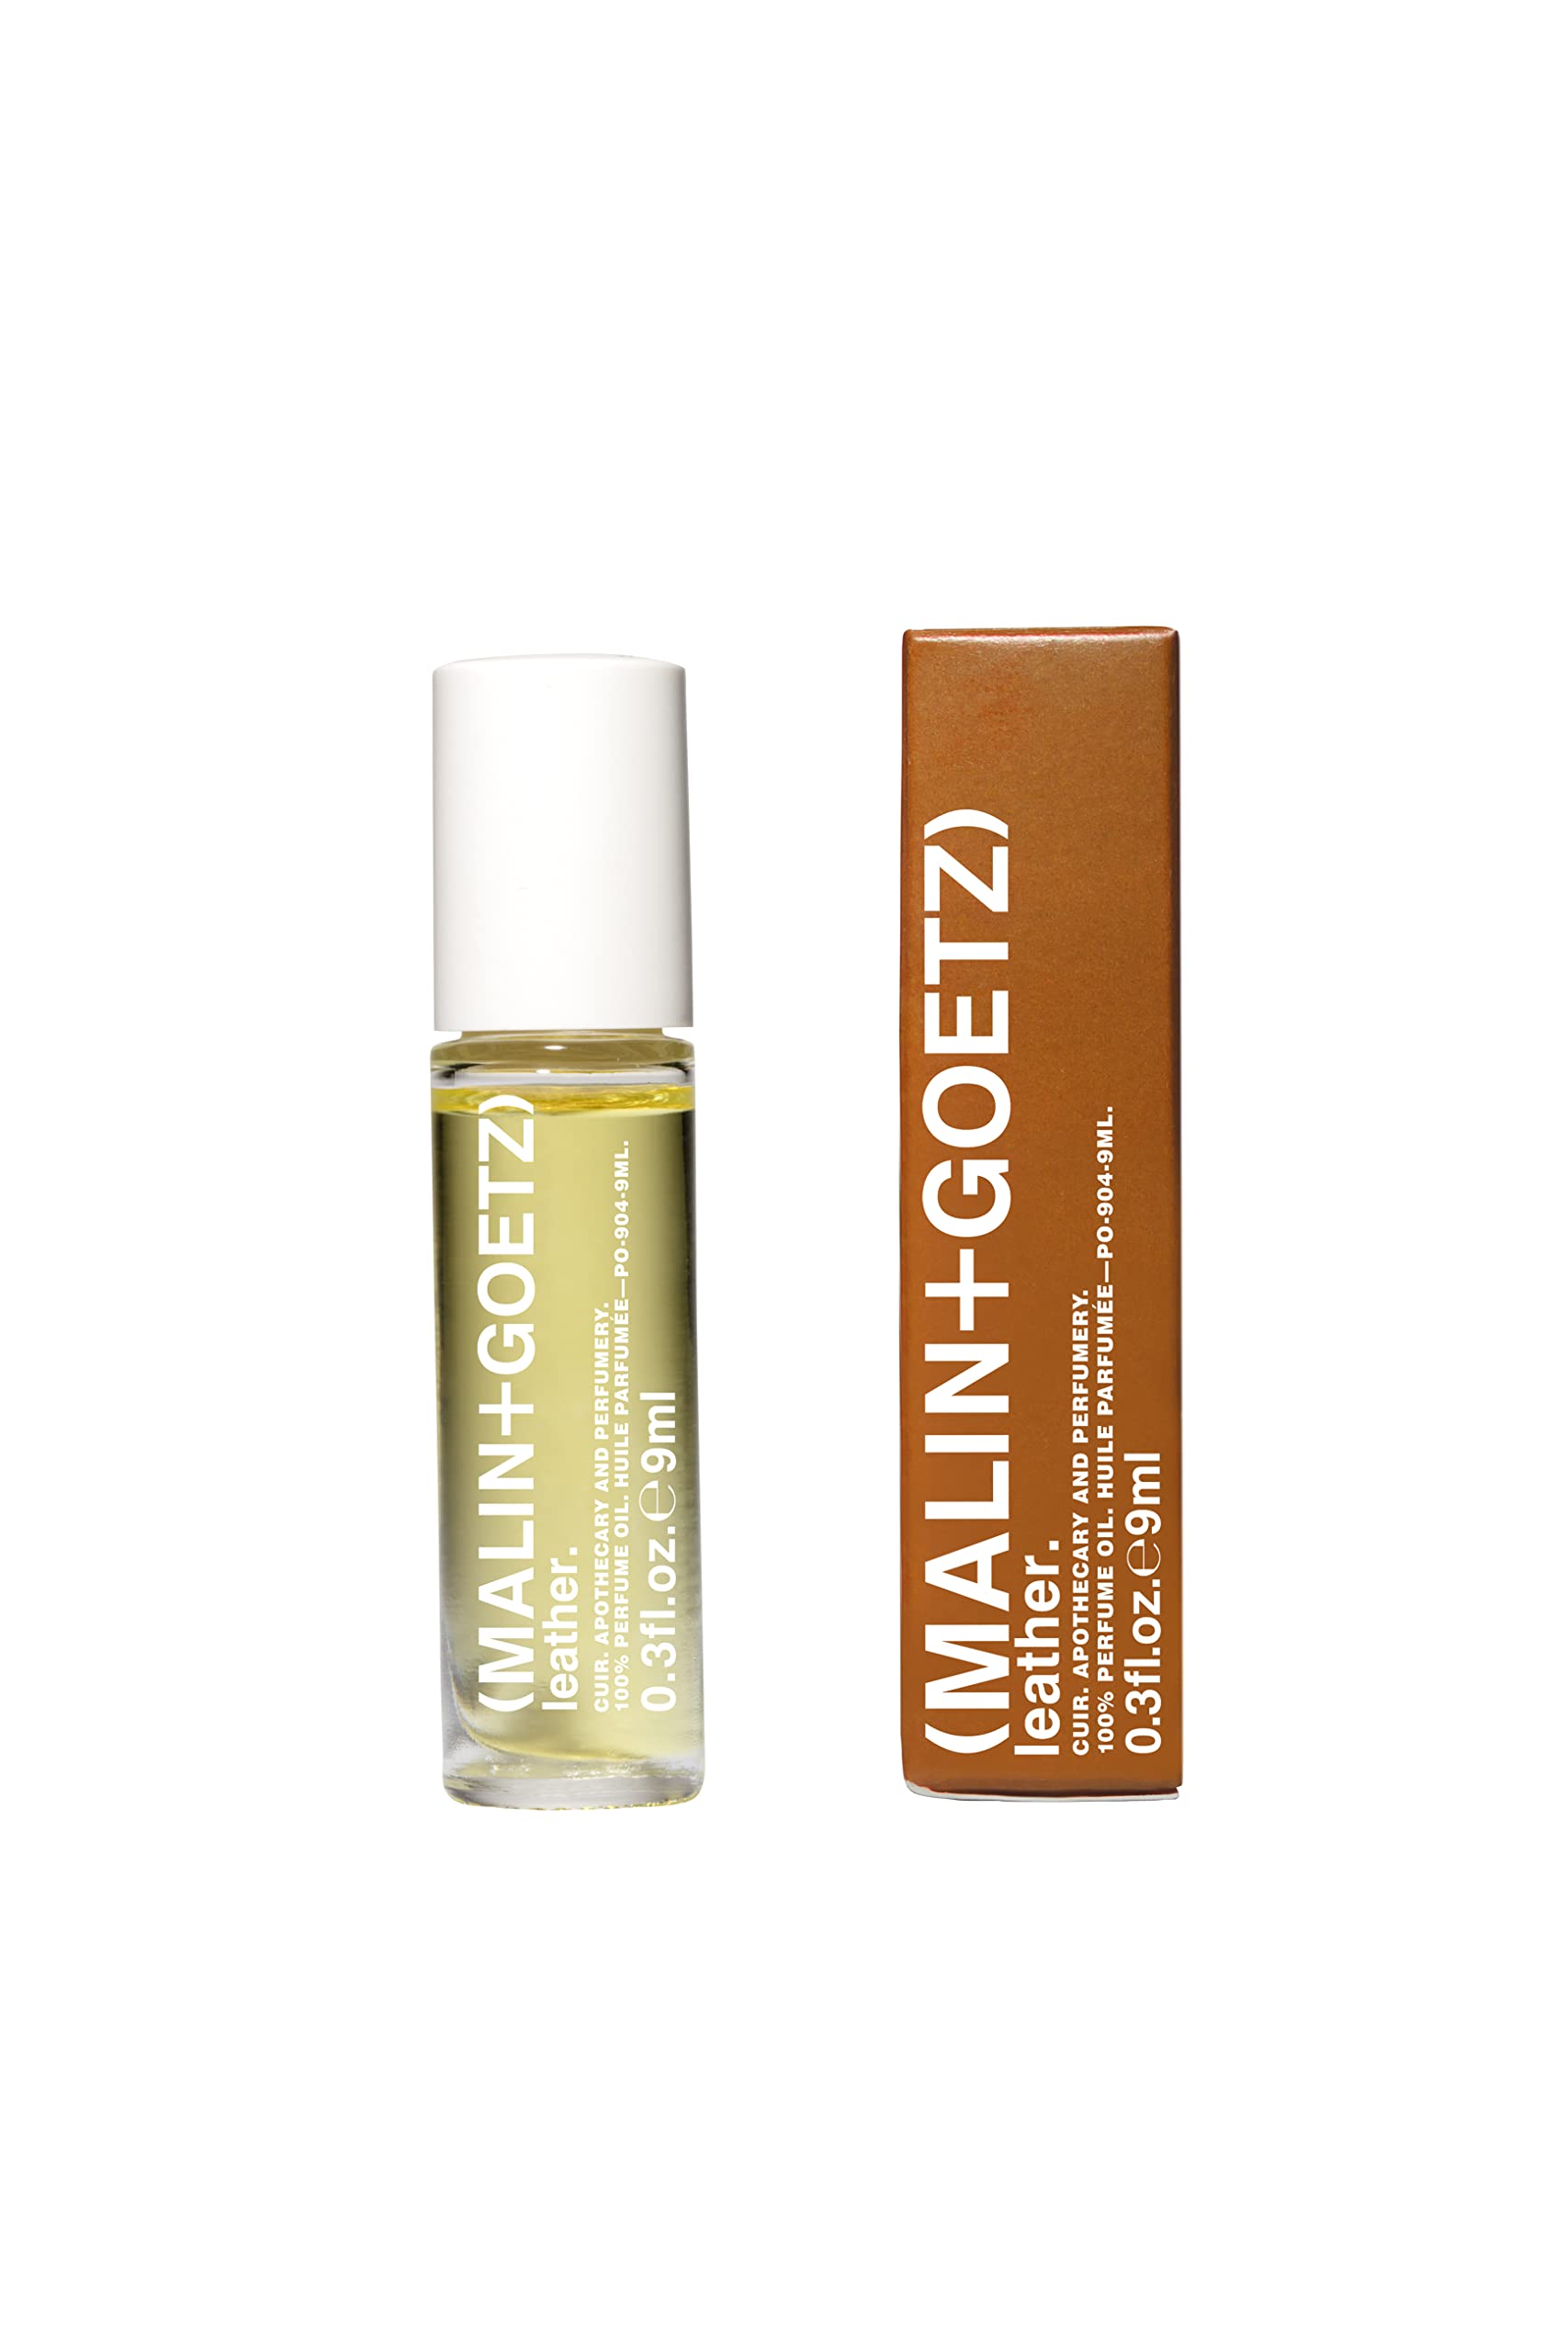 Malin + Goetz Leather Perfume Oil, for Men & Women, Dark & Spicy, Modern Scents, Vegan & Cruelty-Free